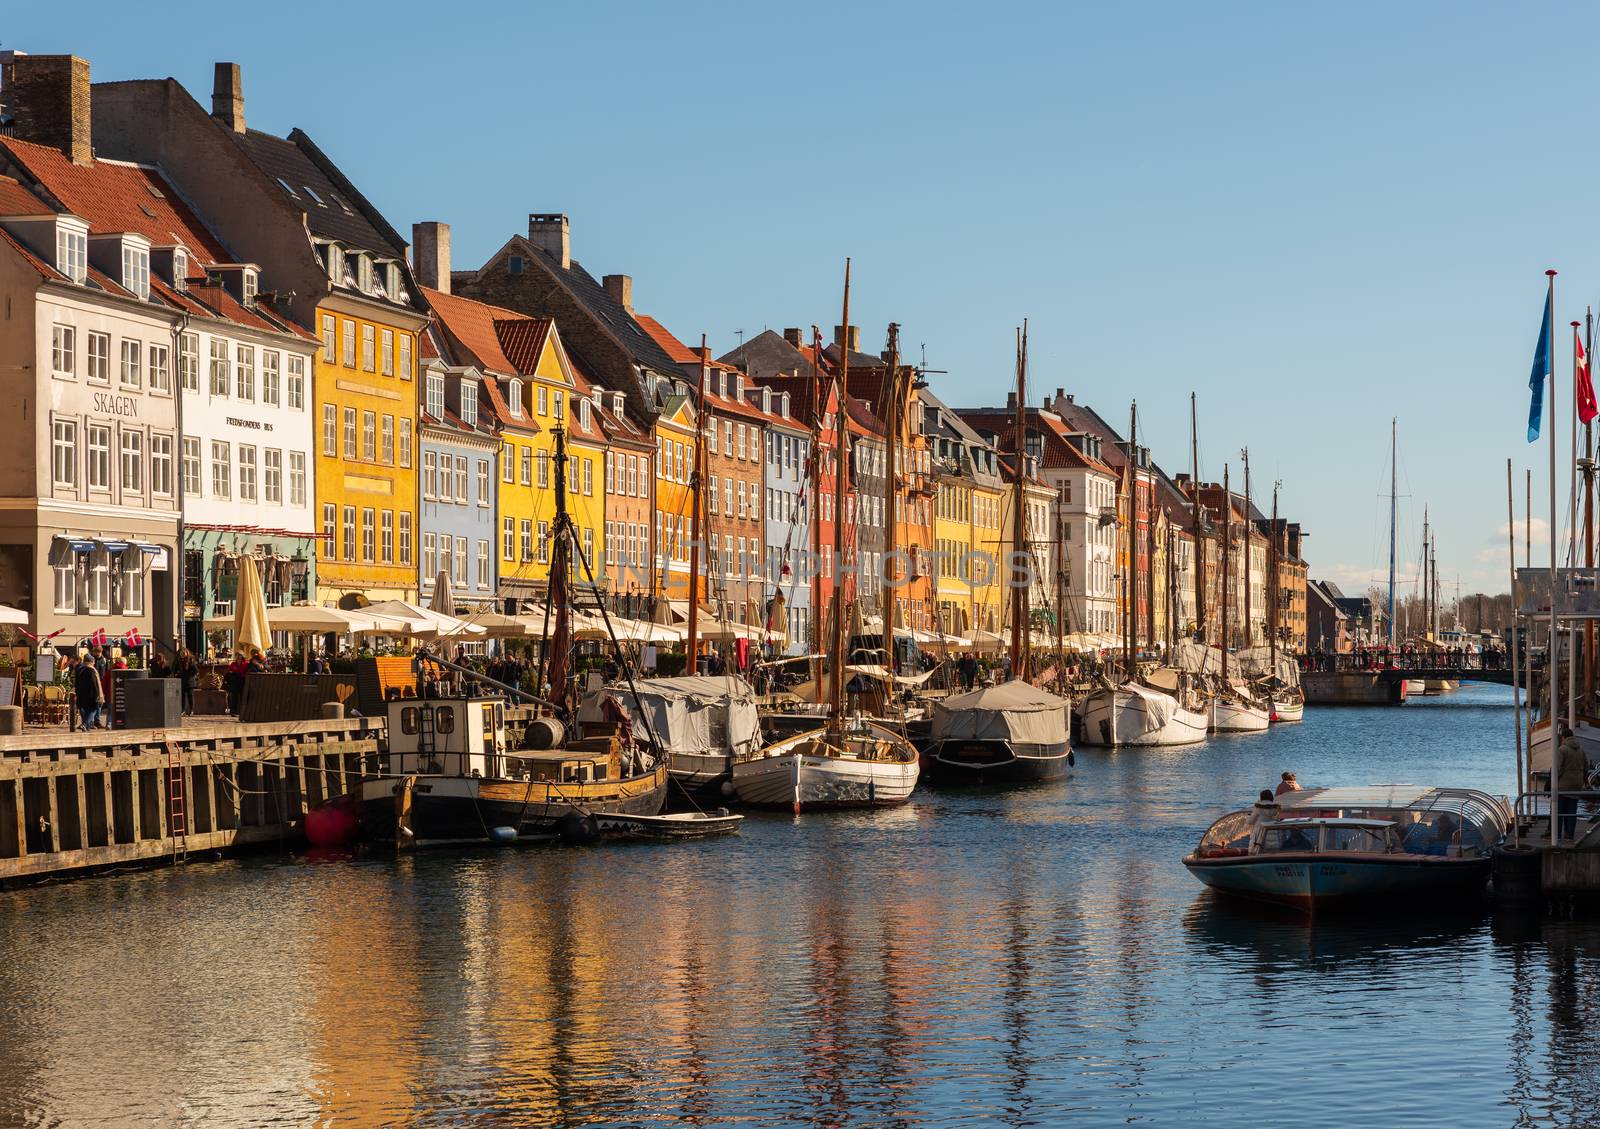 Landscape of the ancient port of Nyhavn in Copenhagen in Denmark by brambillasimone